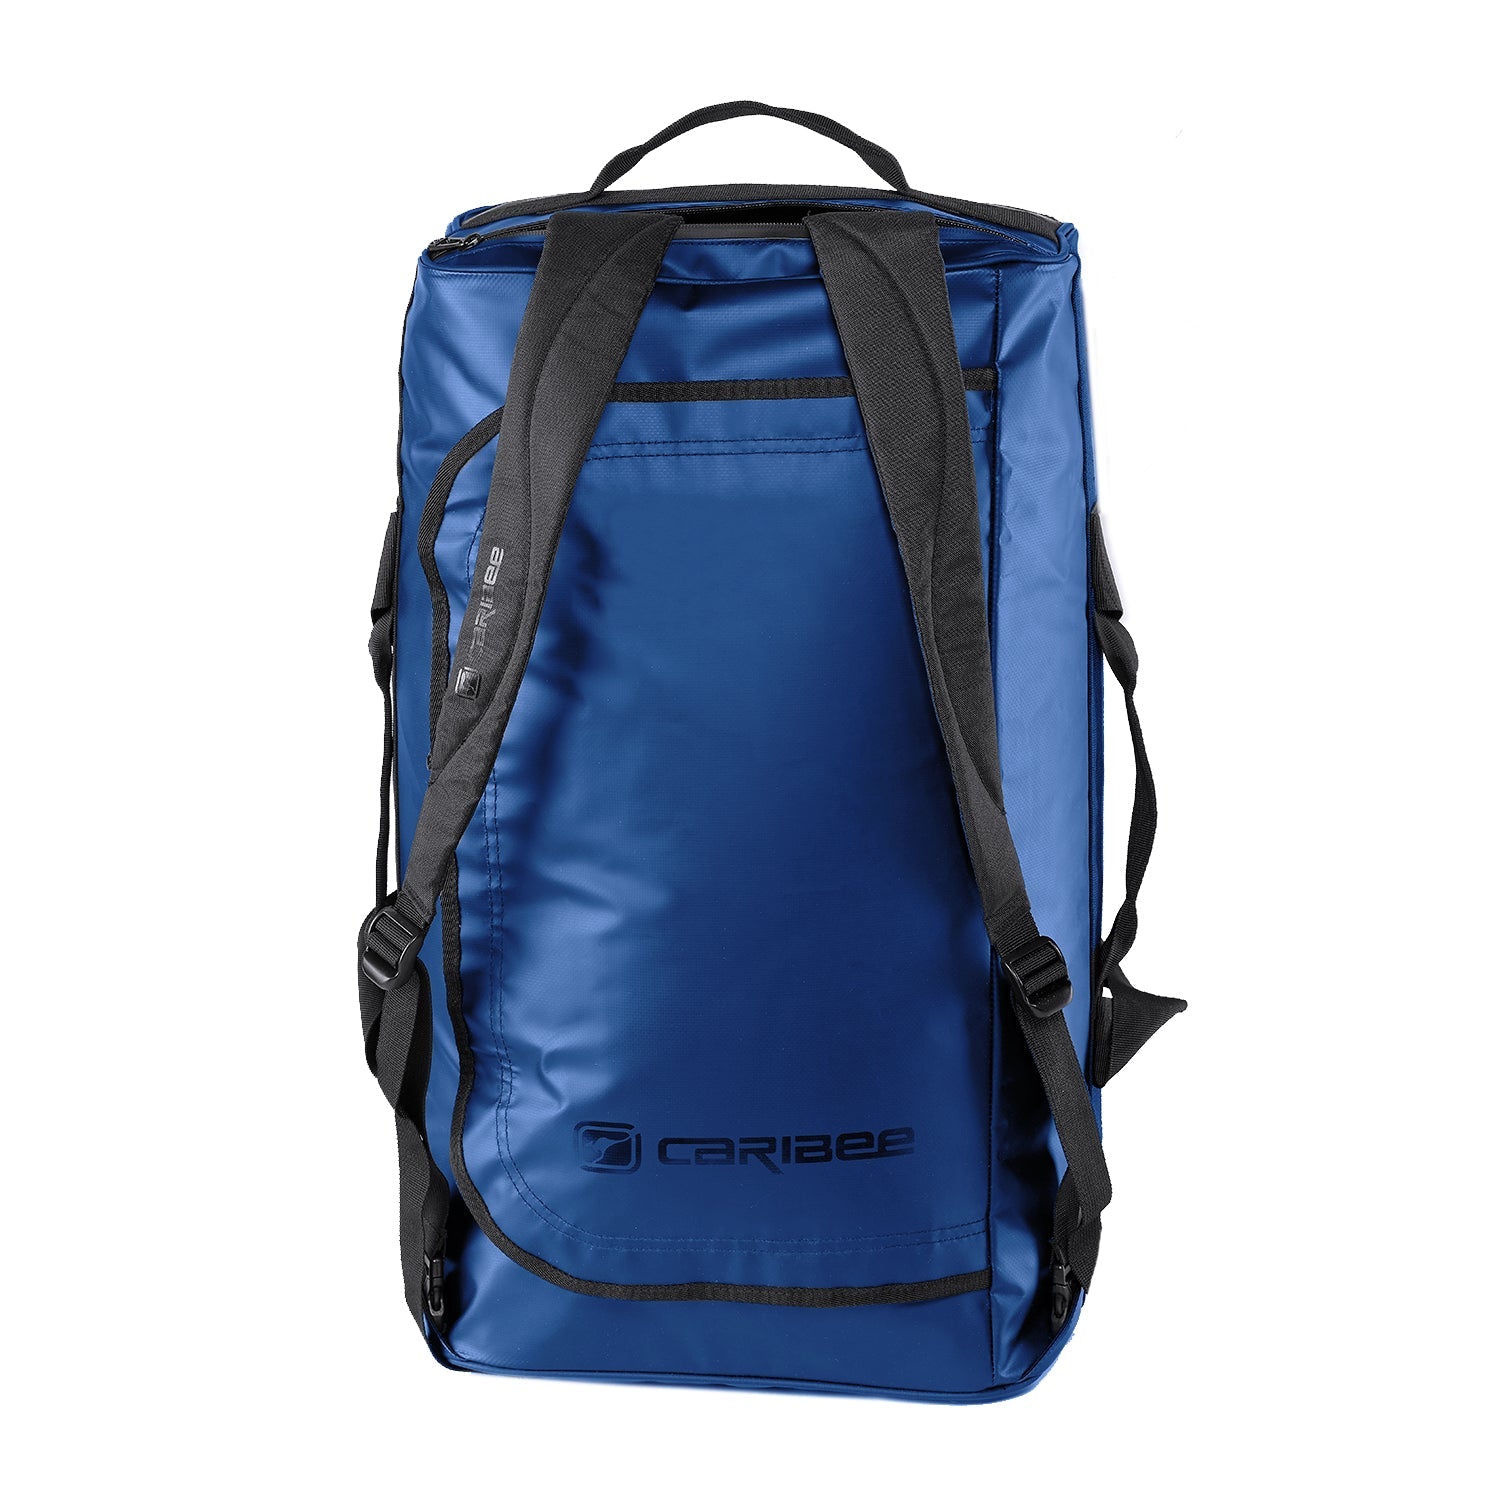 Caribee - Titan 50L Gear bag w Backpack straps - Blue